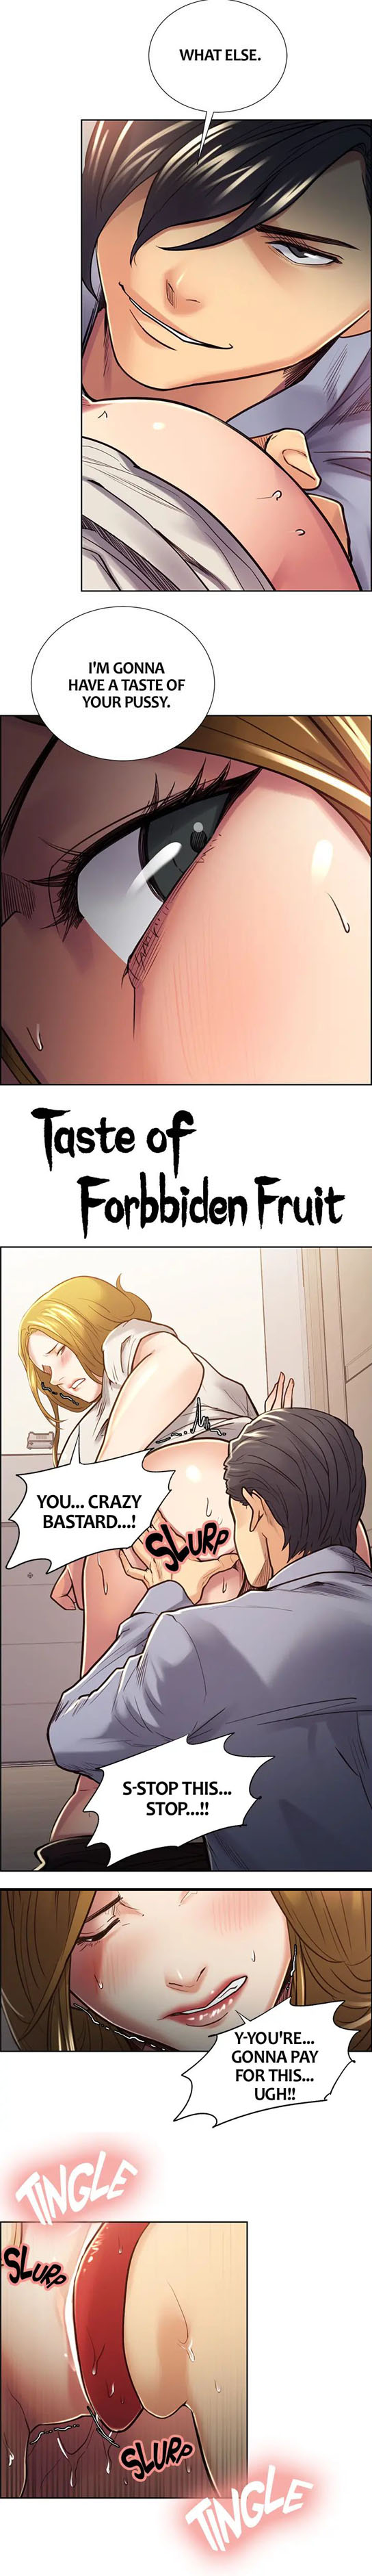 [Serious] Taste of Forbbiden Fruit Ch.27/53 [英訳]